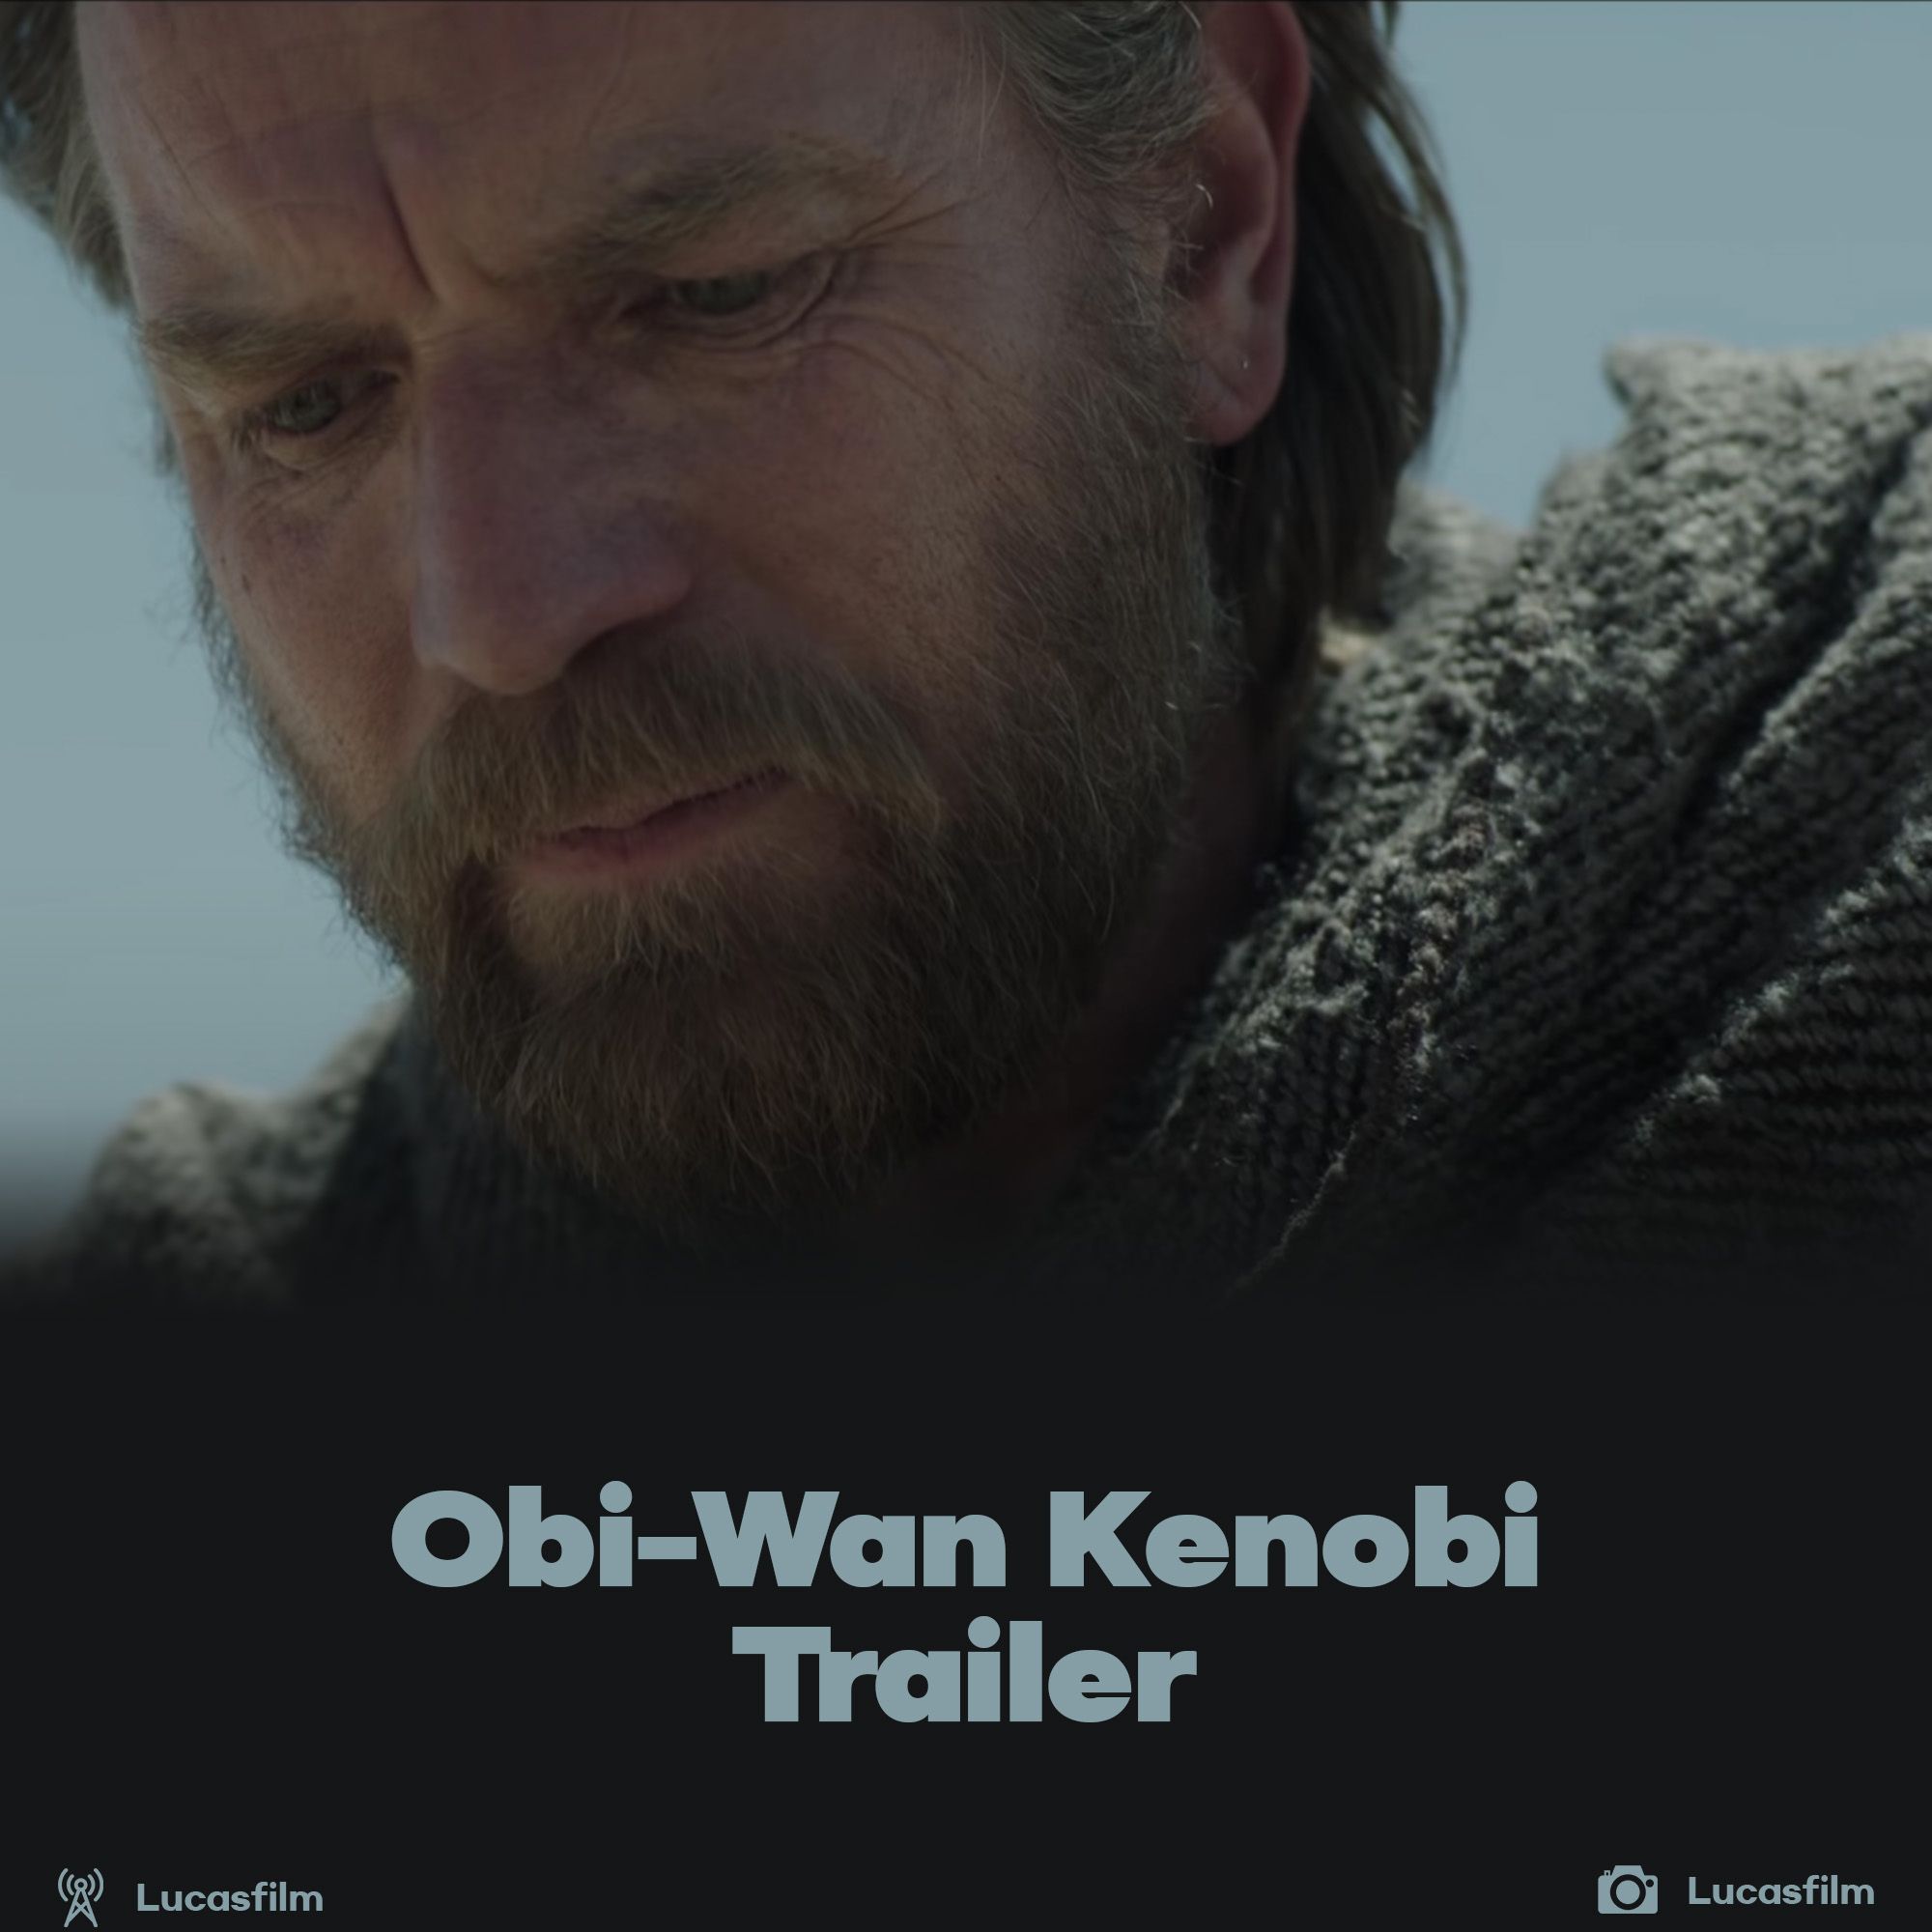 Disney released Obi-Wan Kenobi trailer